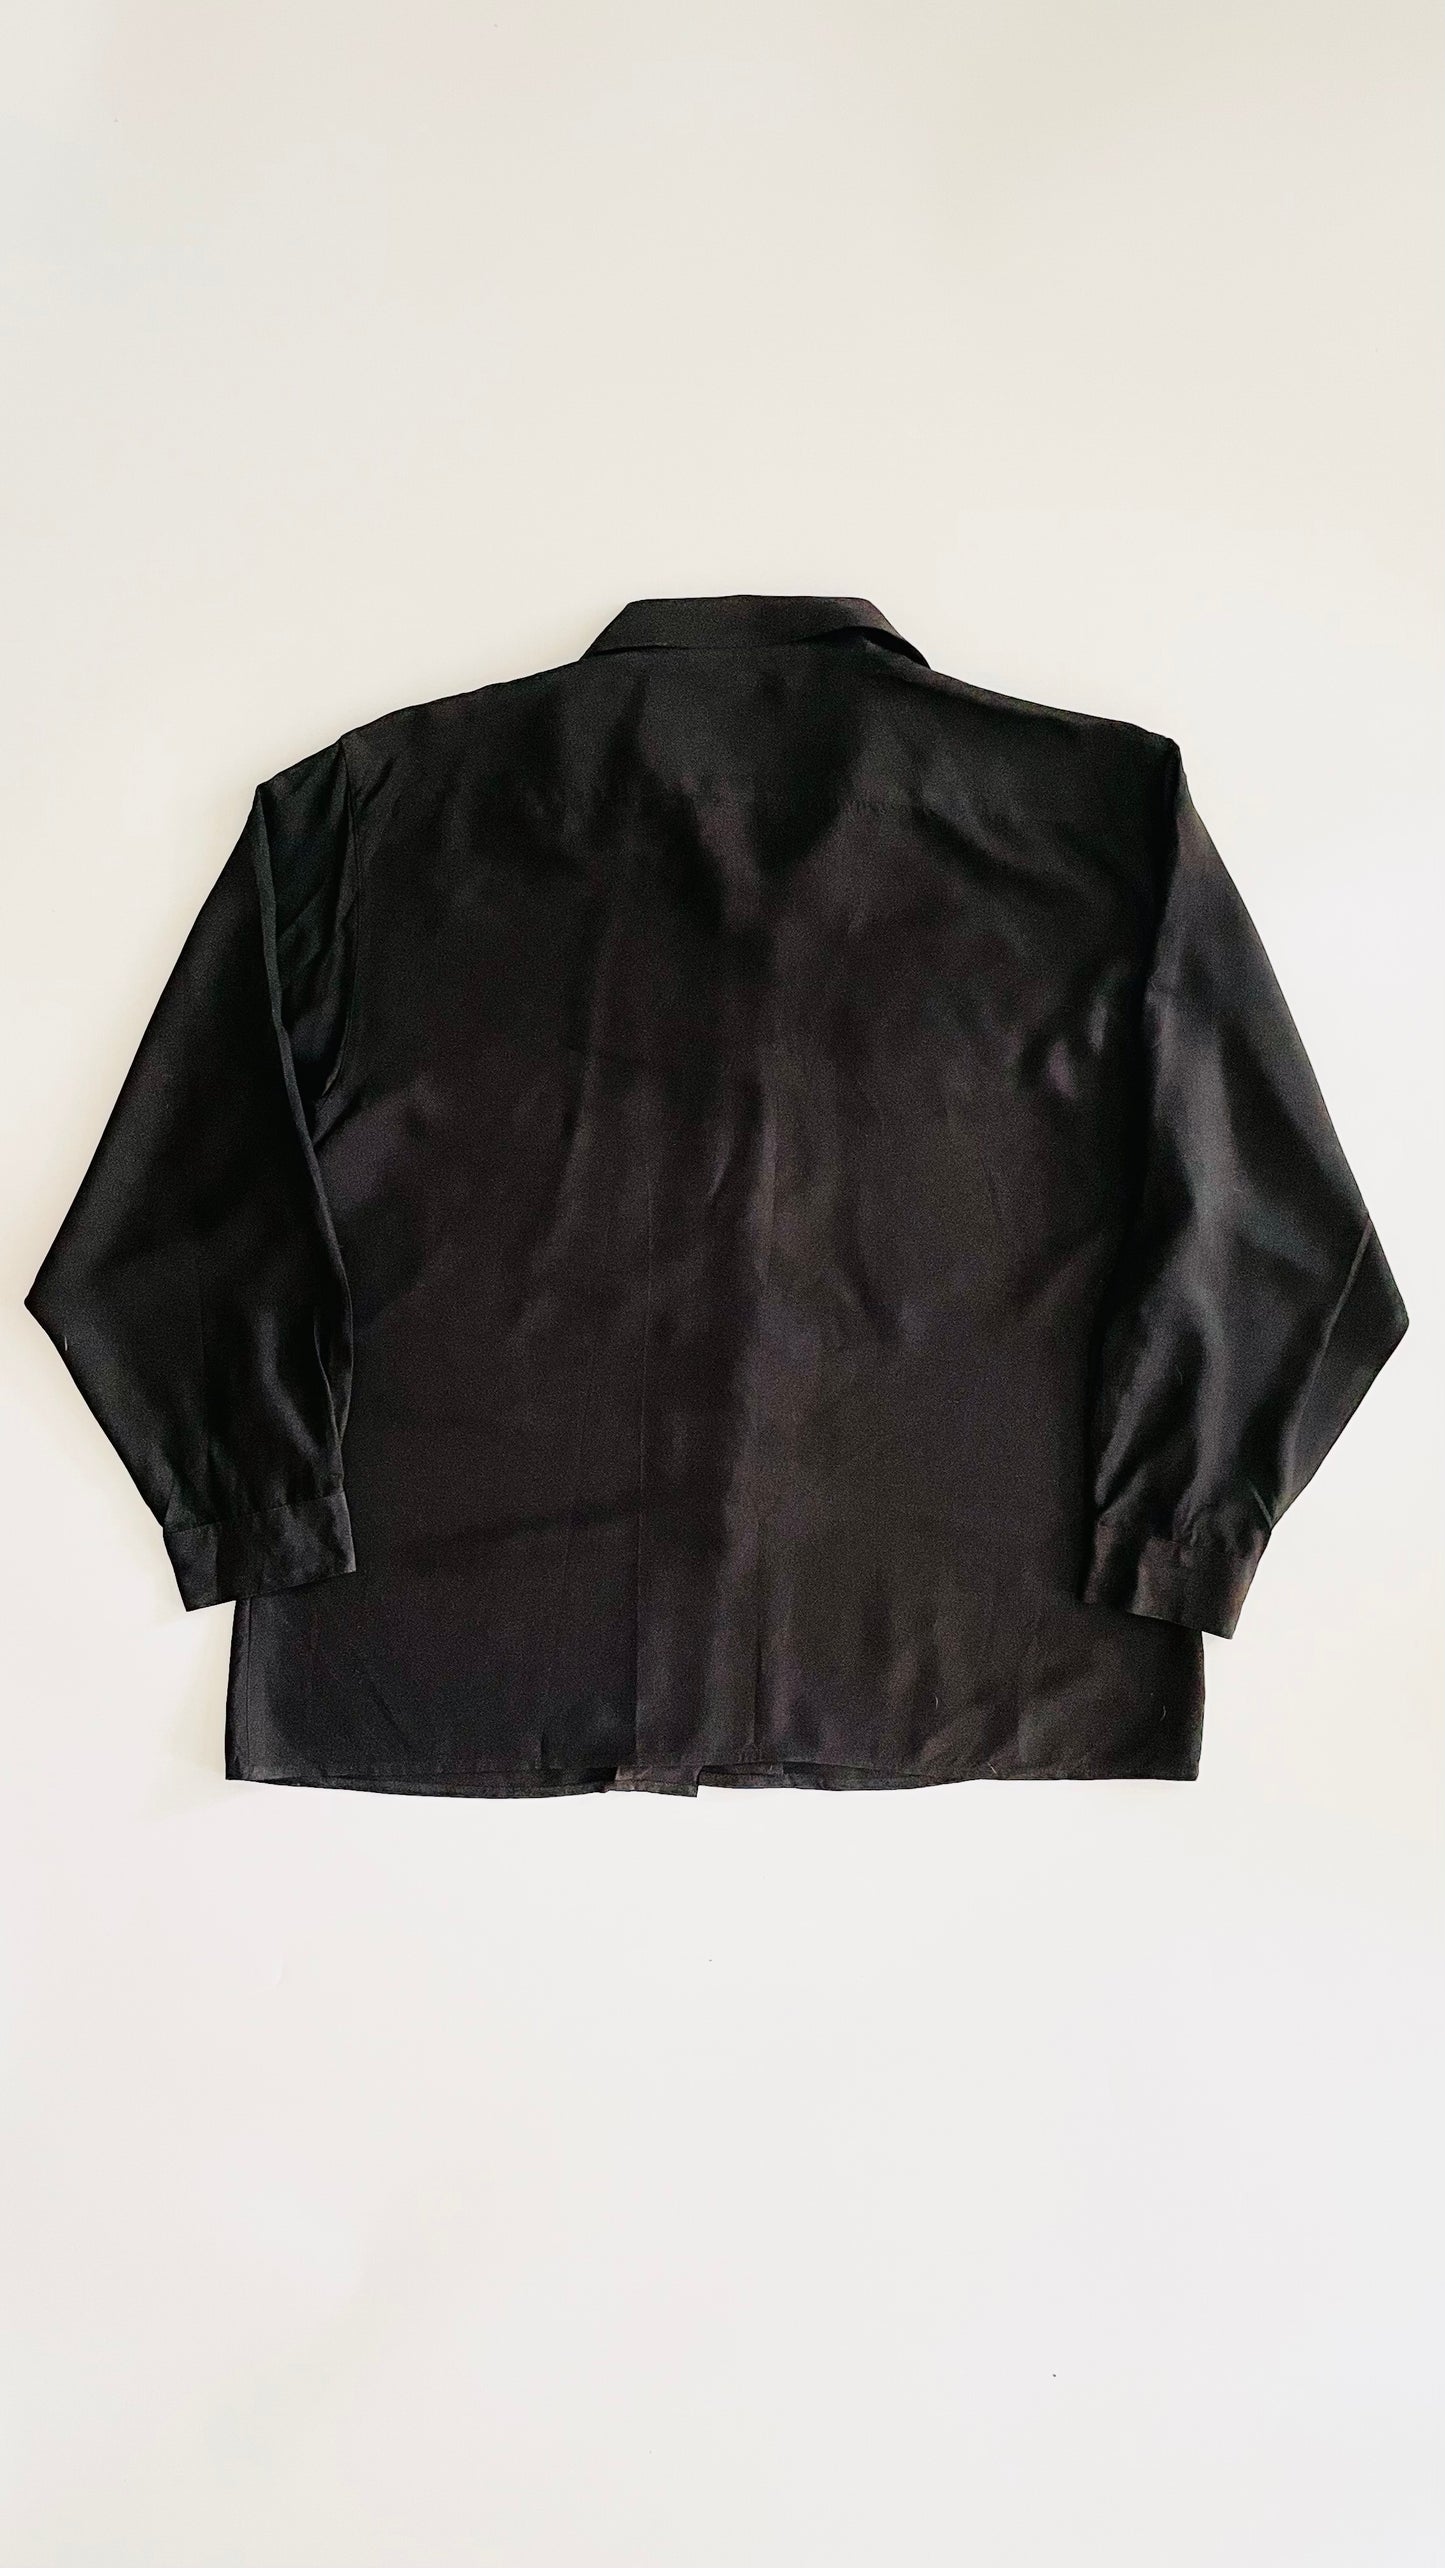 Vintage 90s black silk button up shirt - Size XL